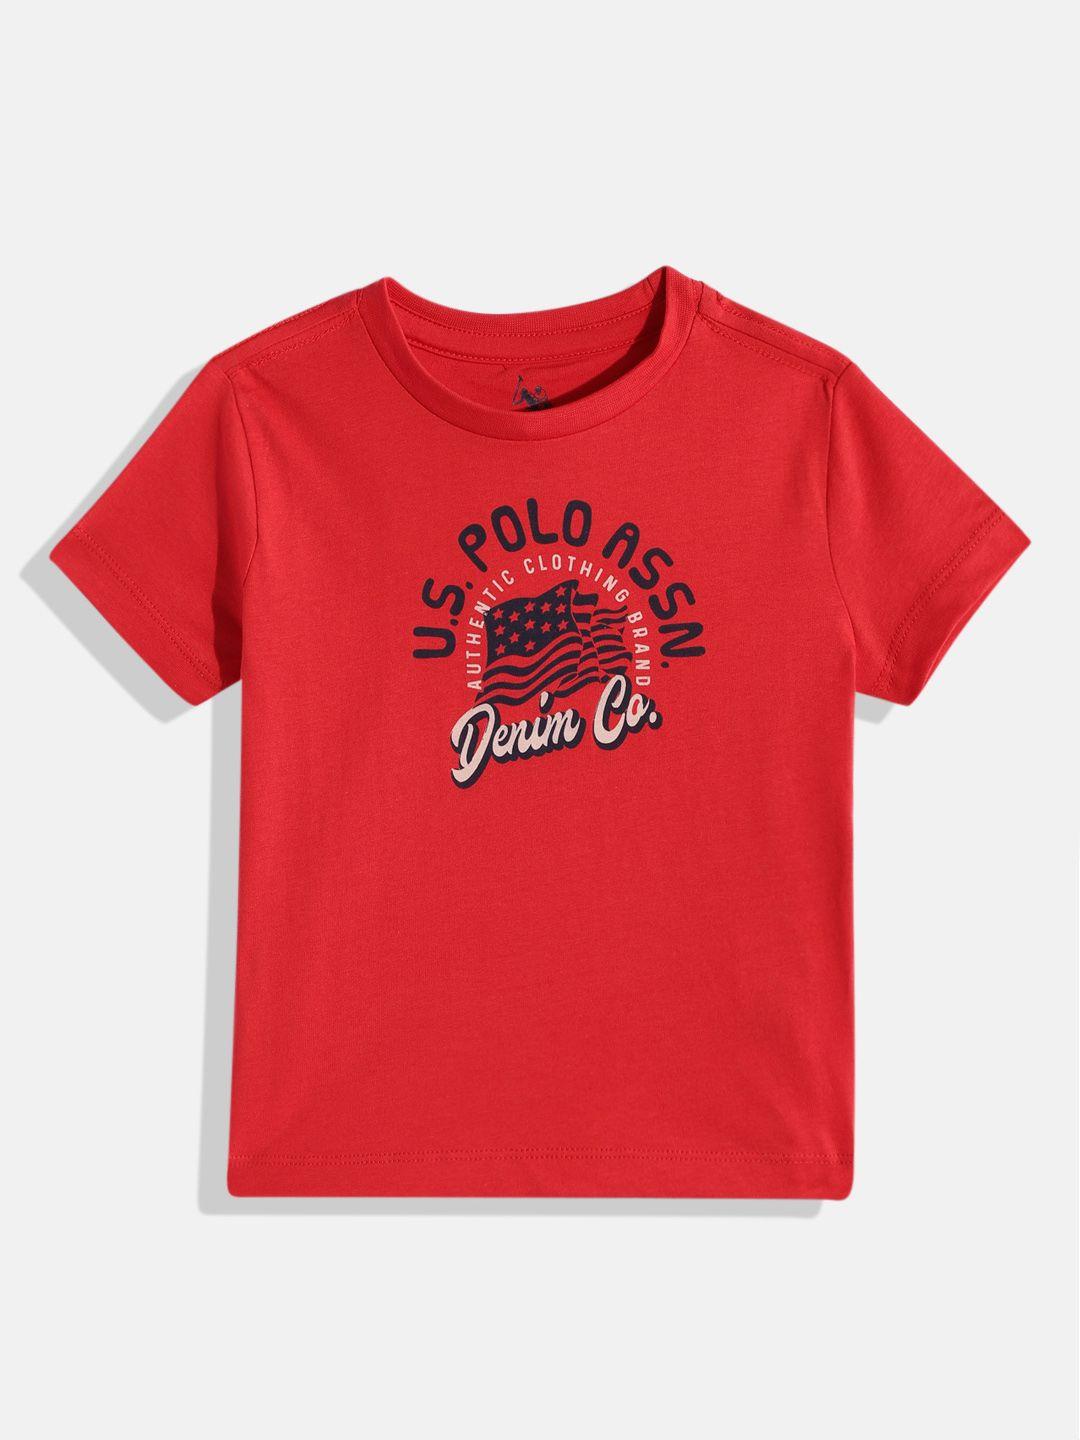 u.s. polo assn. kids boys red & navy blue brand logo printed pure cotton t-shirt